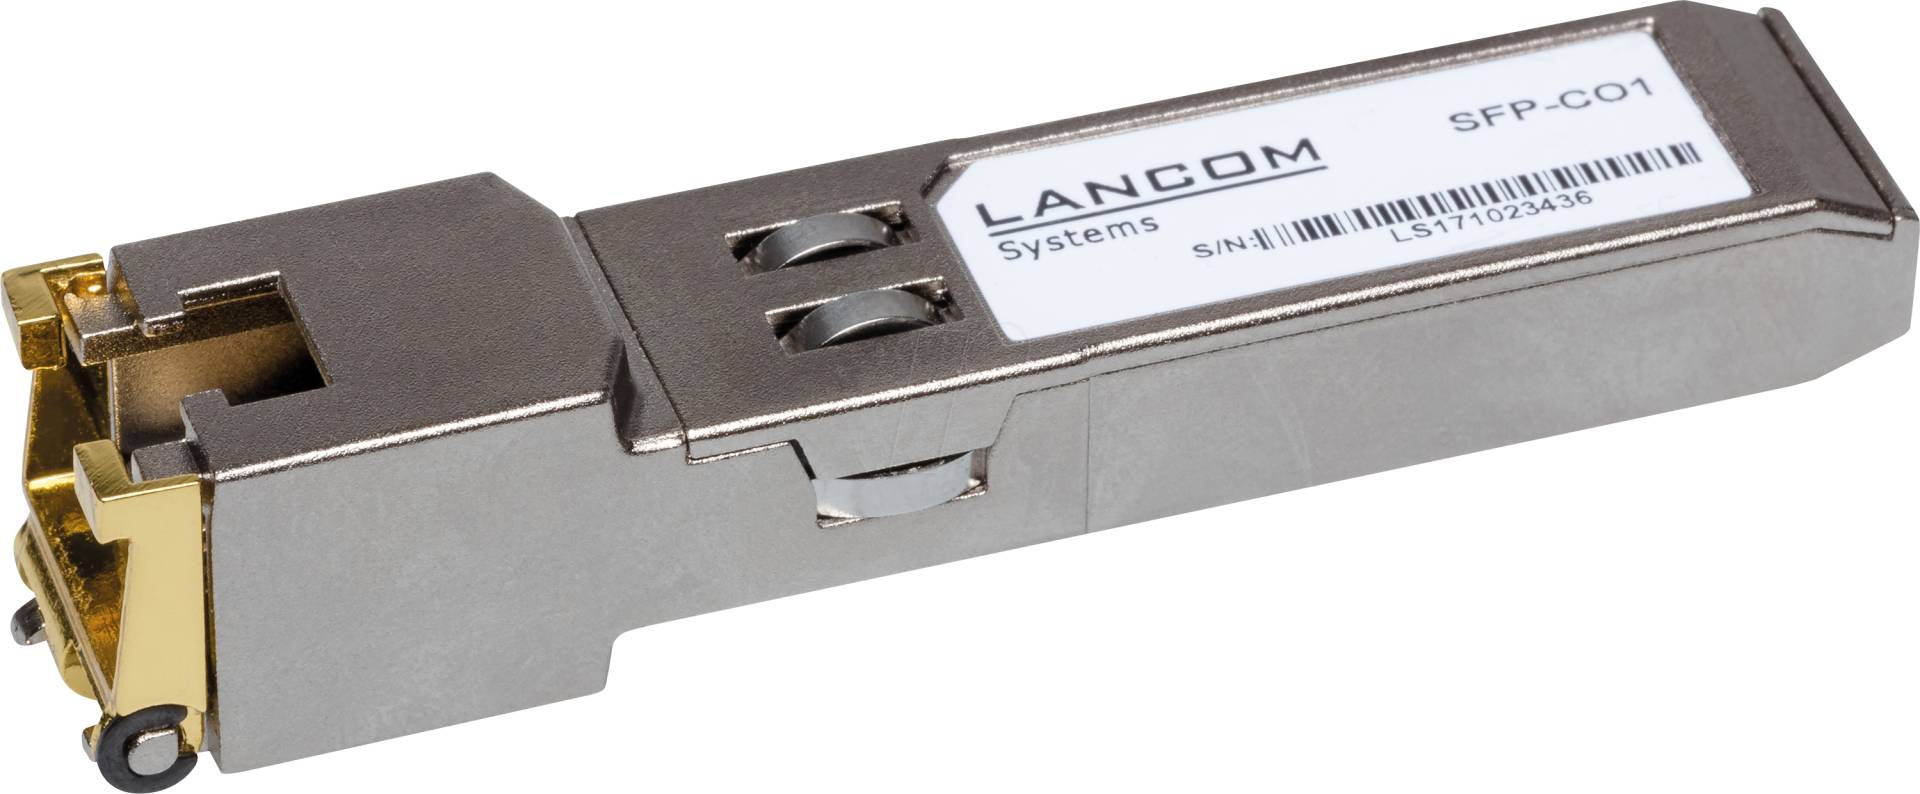 LANCOM SFP-CO1 - Mini GBIC, 1000BaseT von Lancom